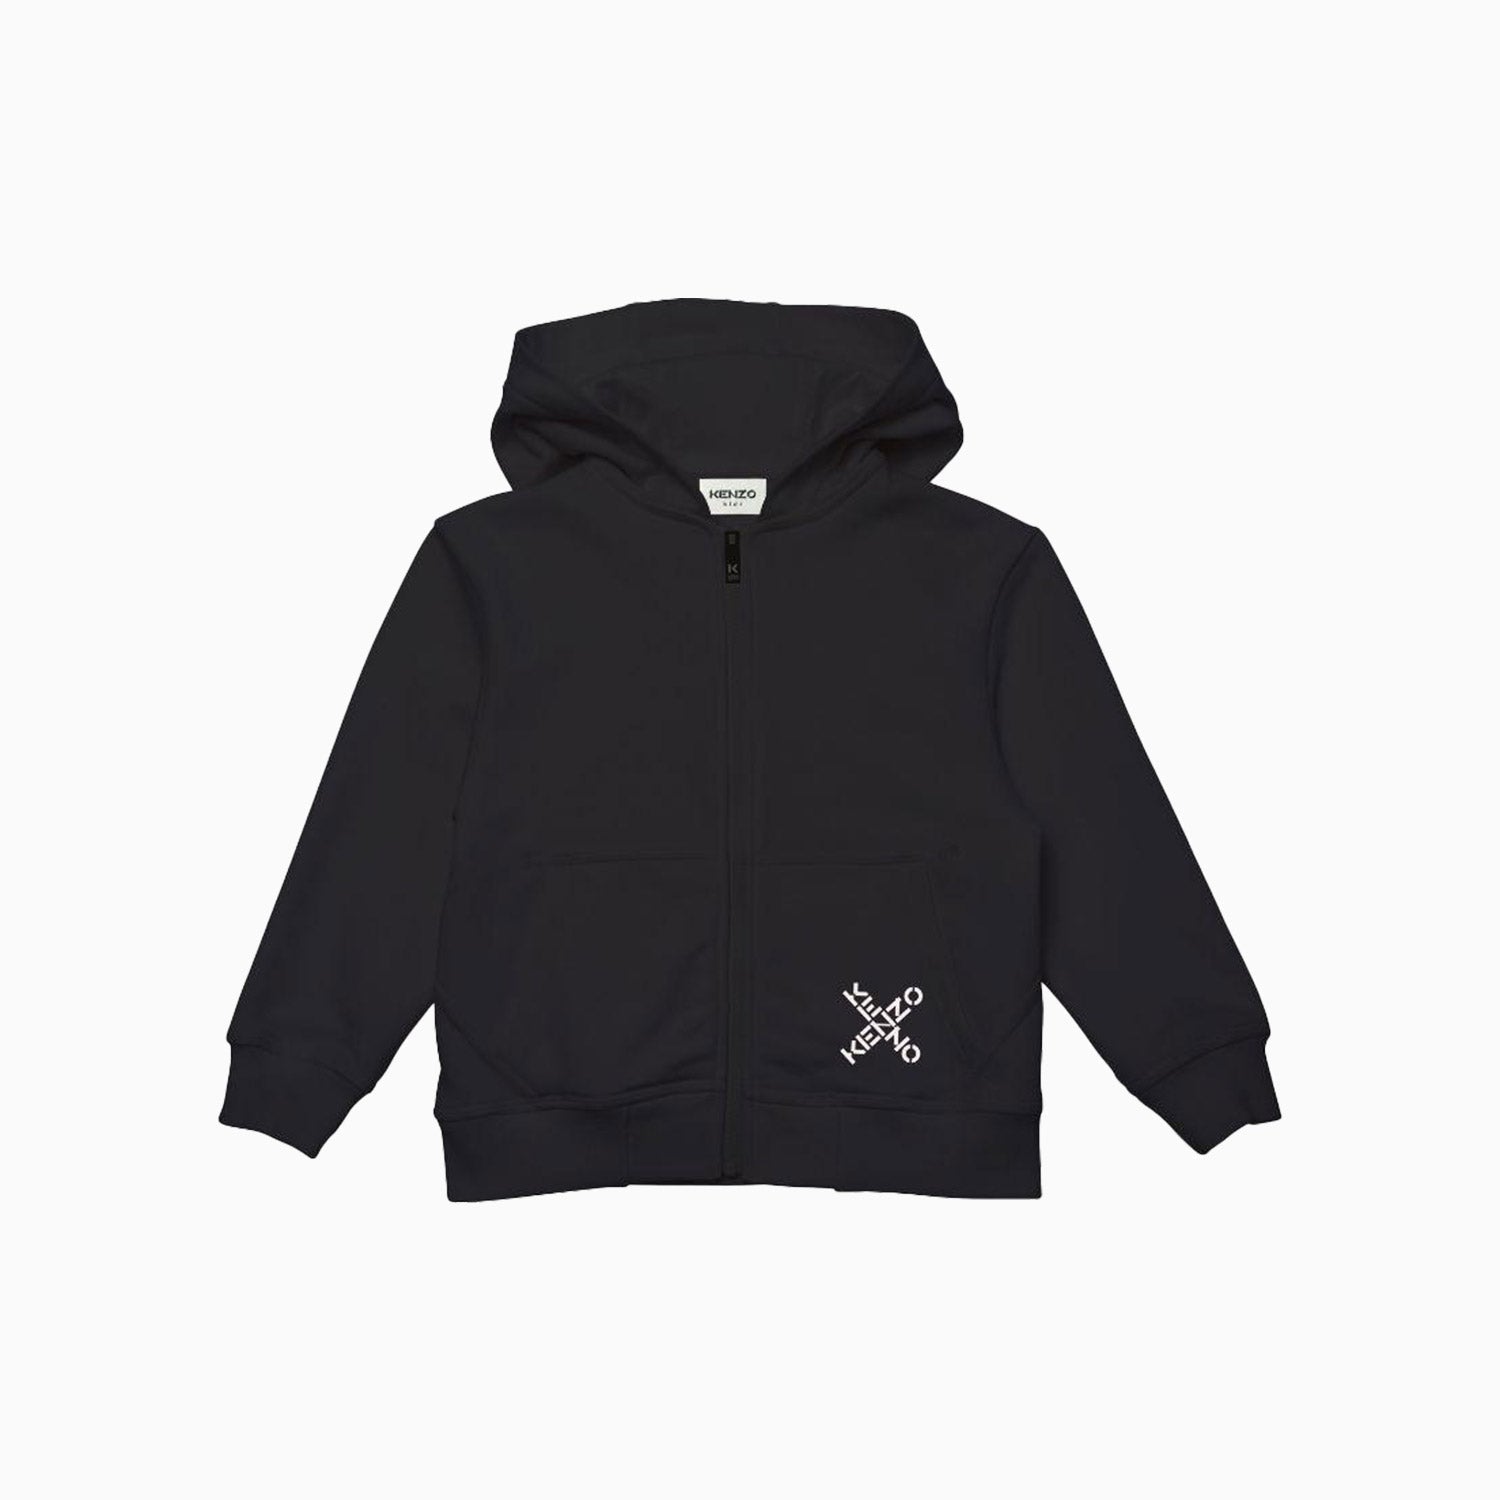 Kenzo Kid's Cross Logo Outfit - Color: Black - Kids Premium Clothing -